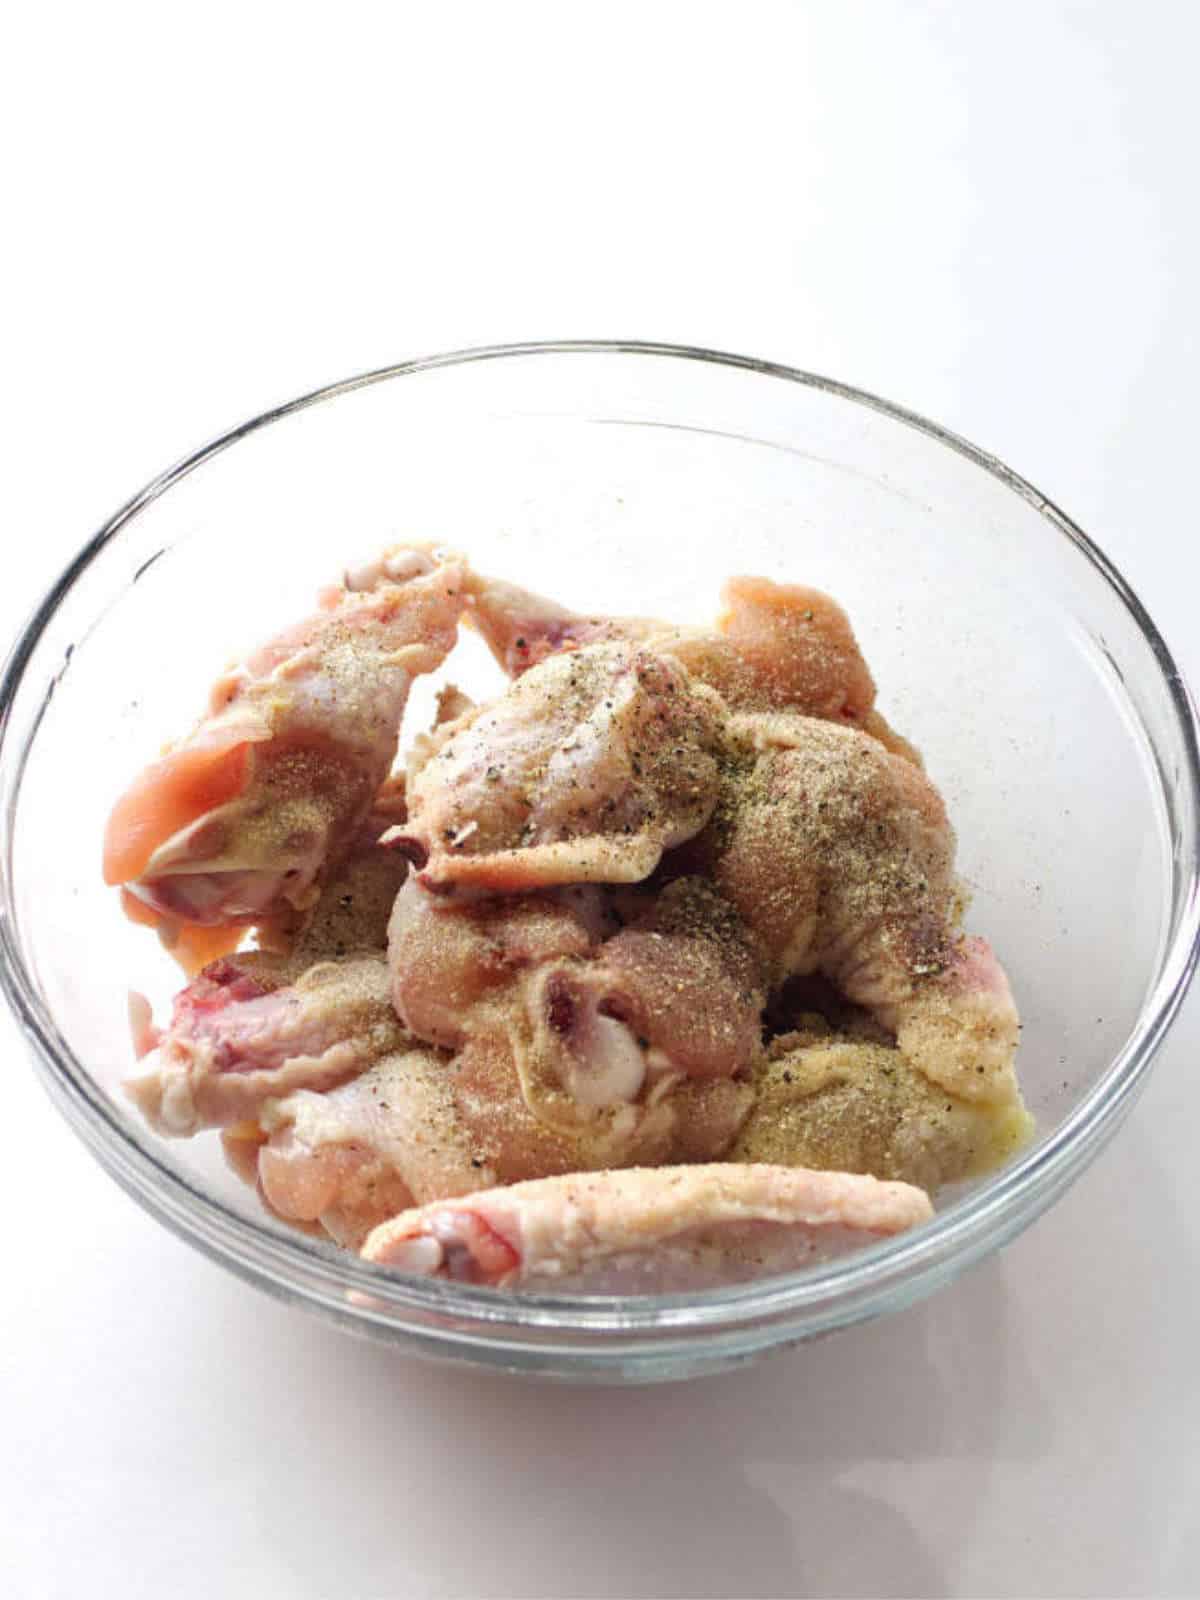 chicken wings in a bowl with seasonings.